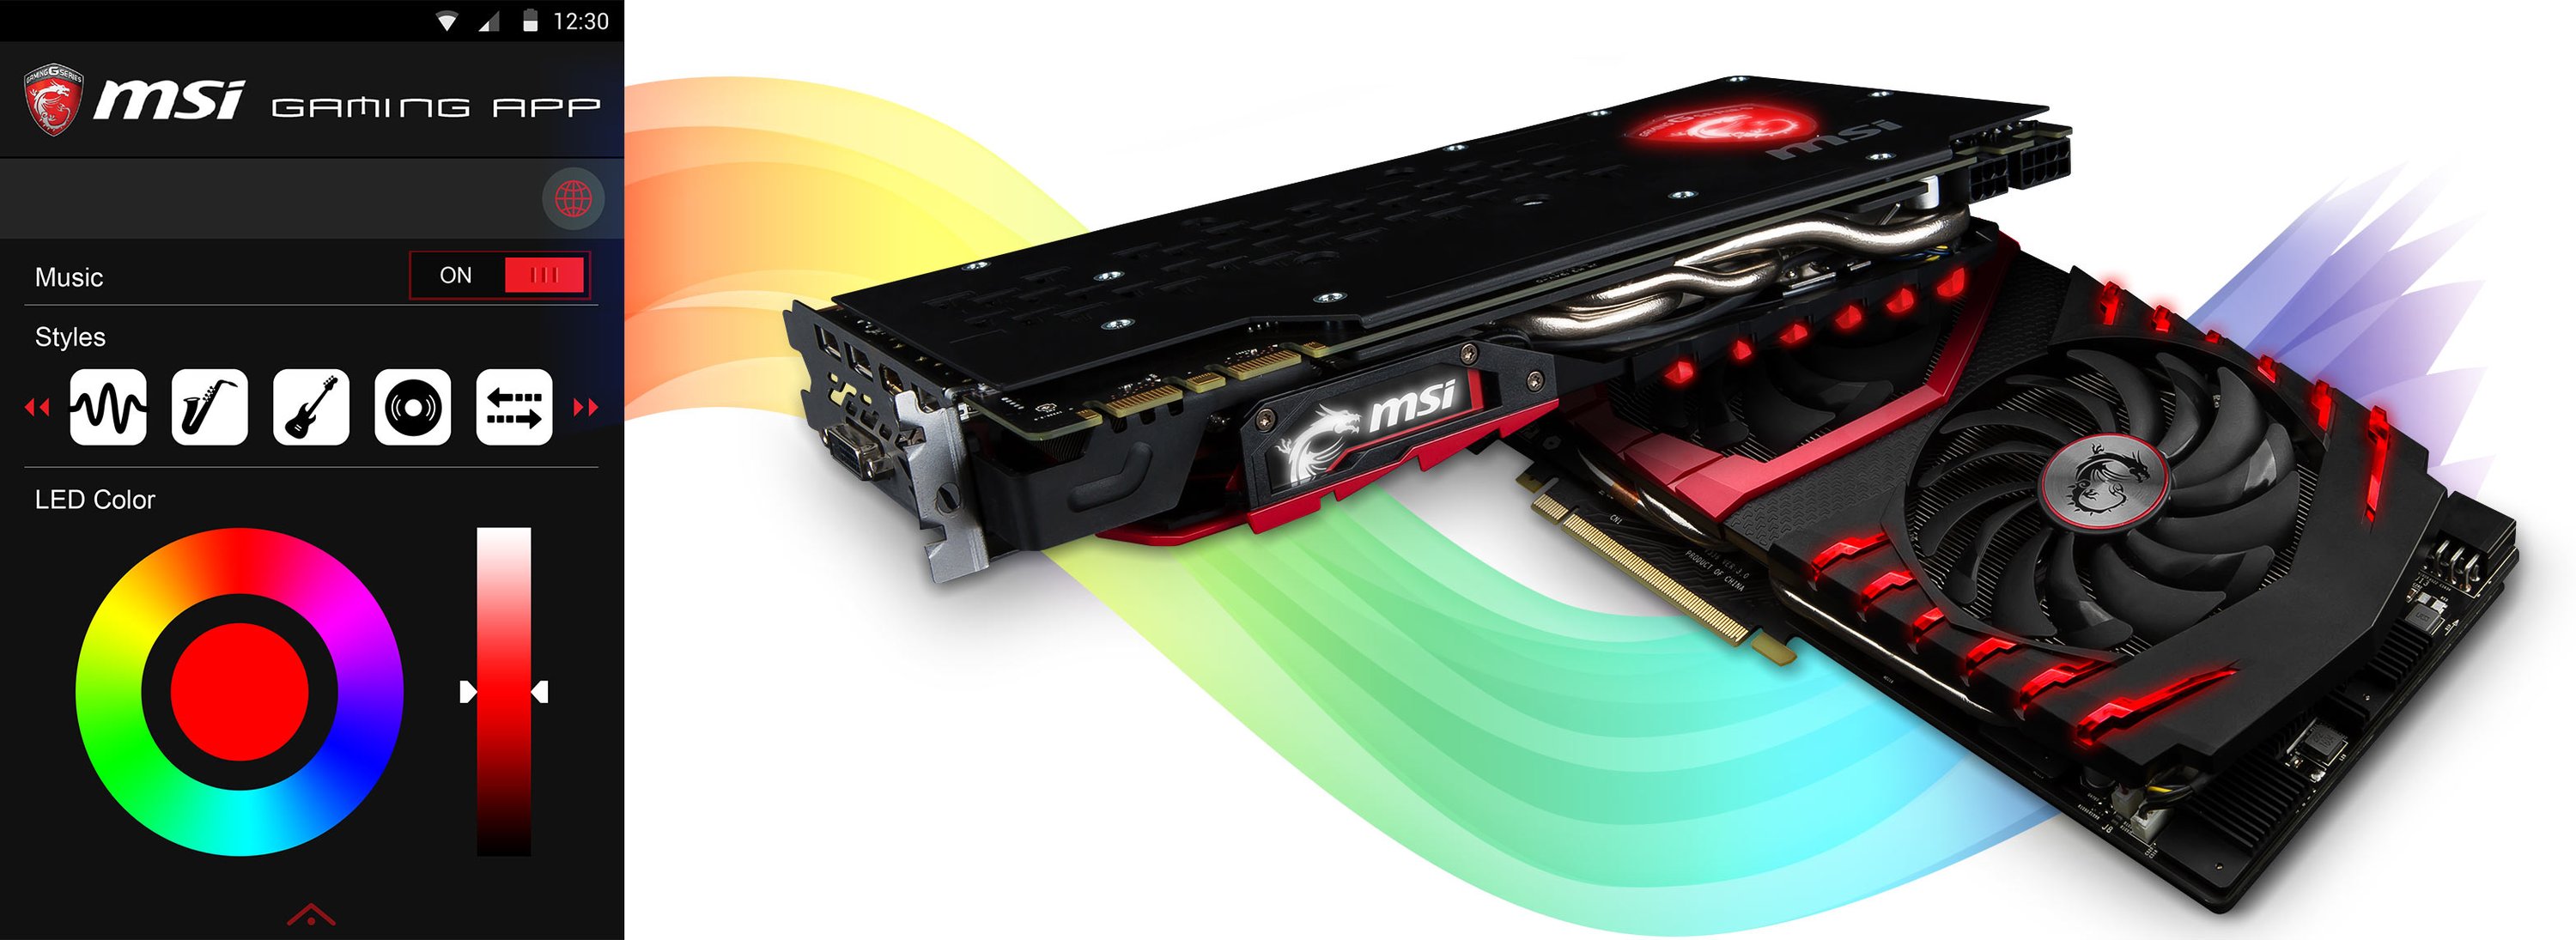 MSI GeForce GTX 1060 6GB Gaming X - Inet.se